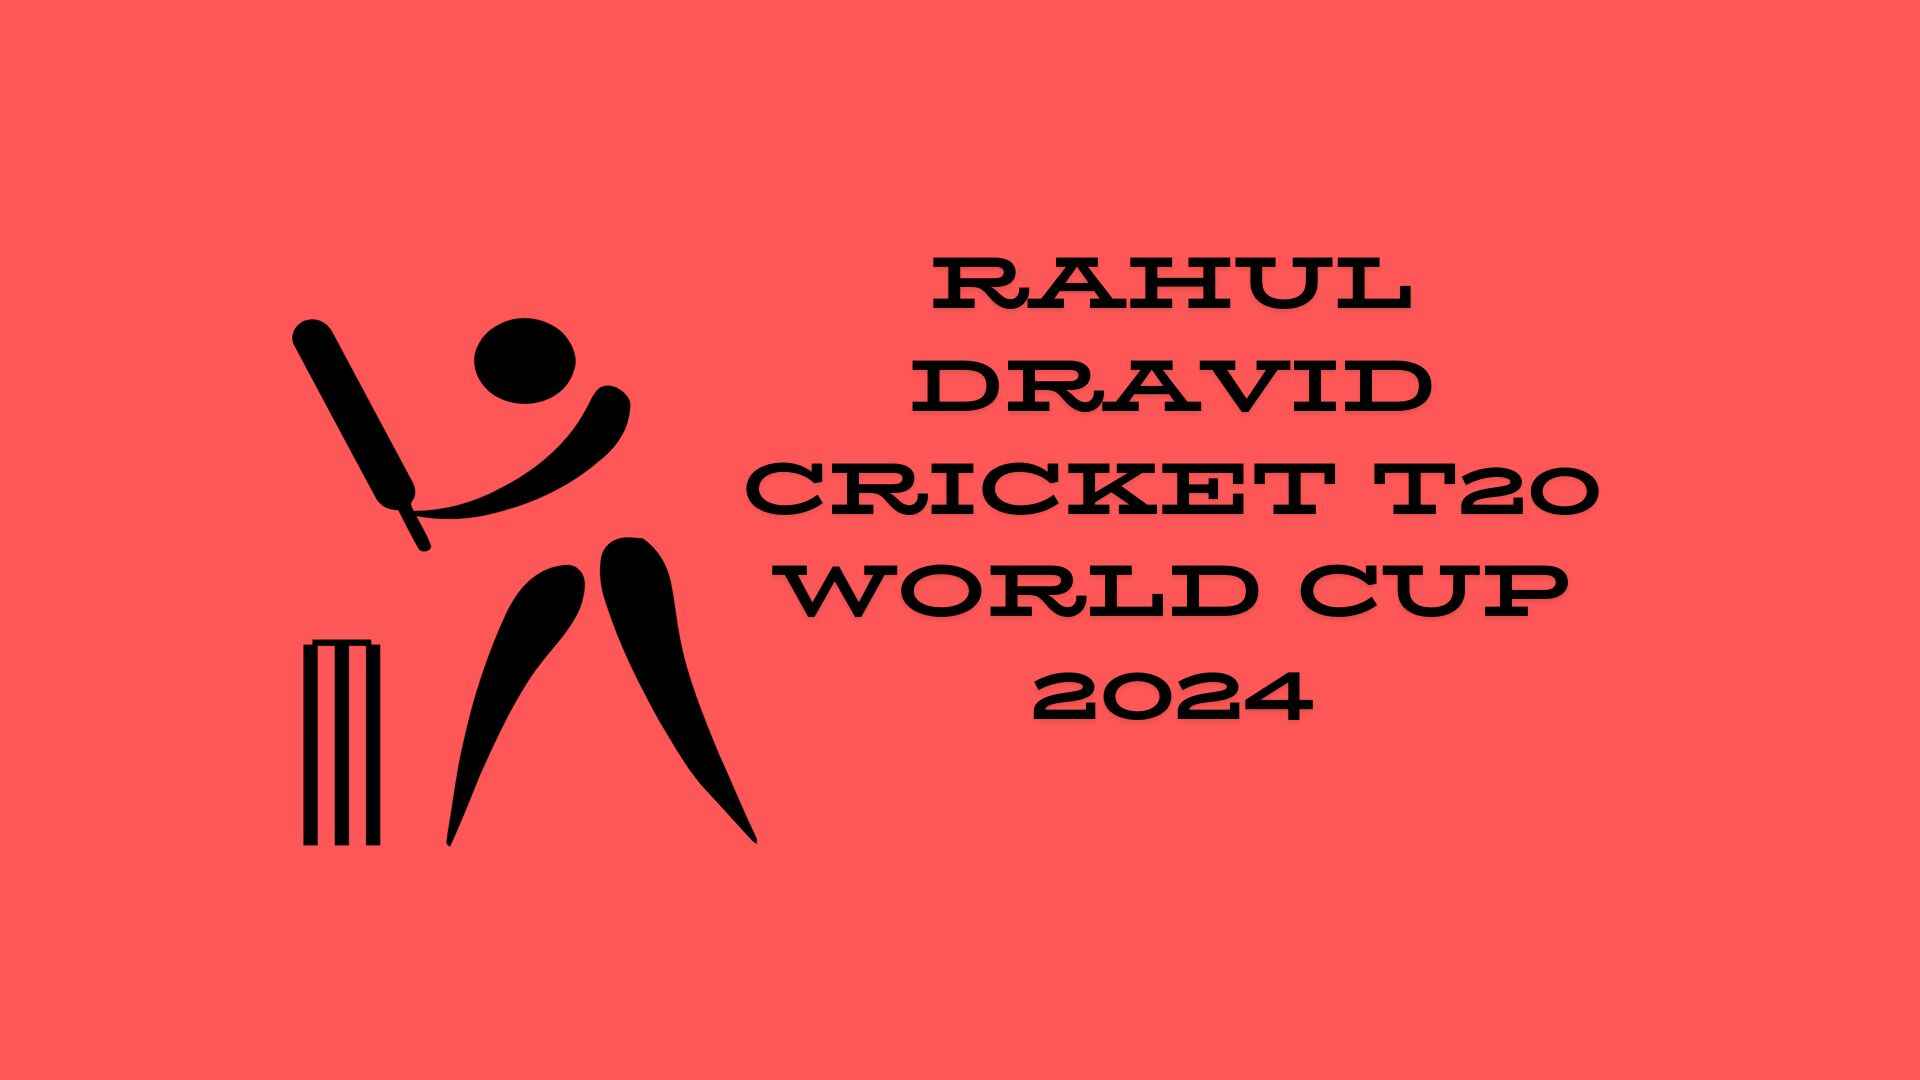 Rahul Dravid Cricket T20 World Cup 2024